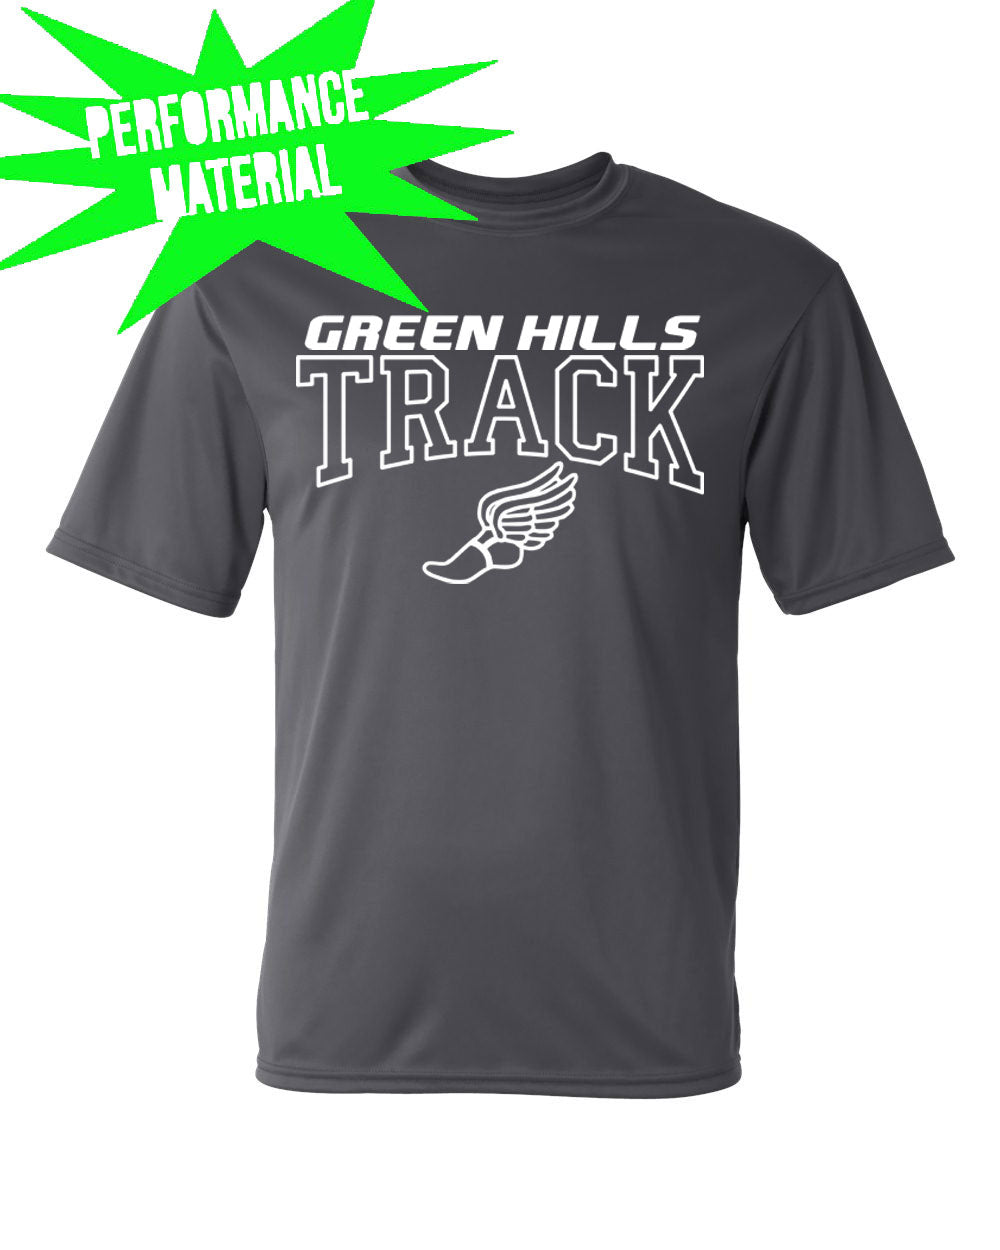 Green Hills Track Performance Material design 3 T-Shirt